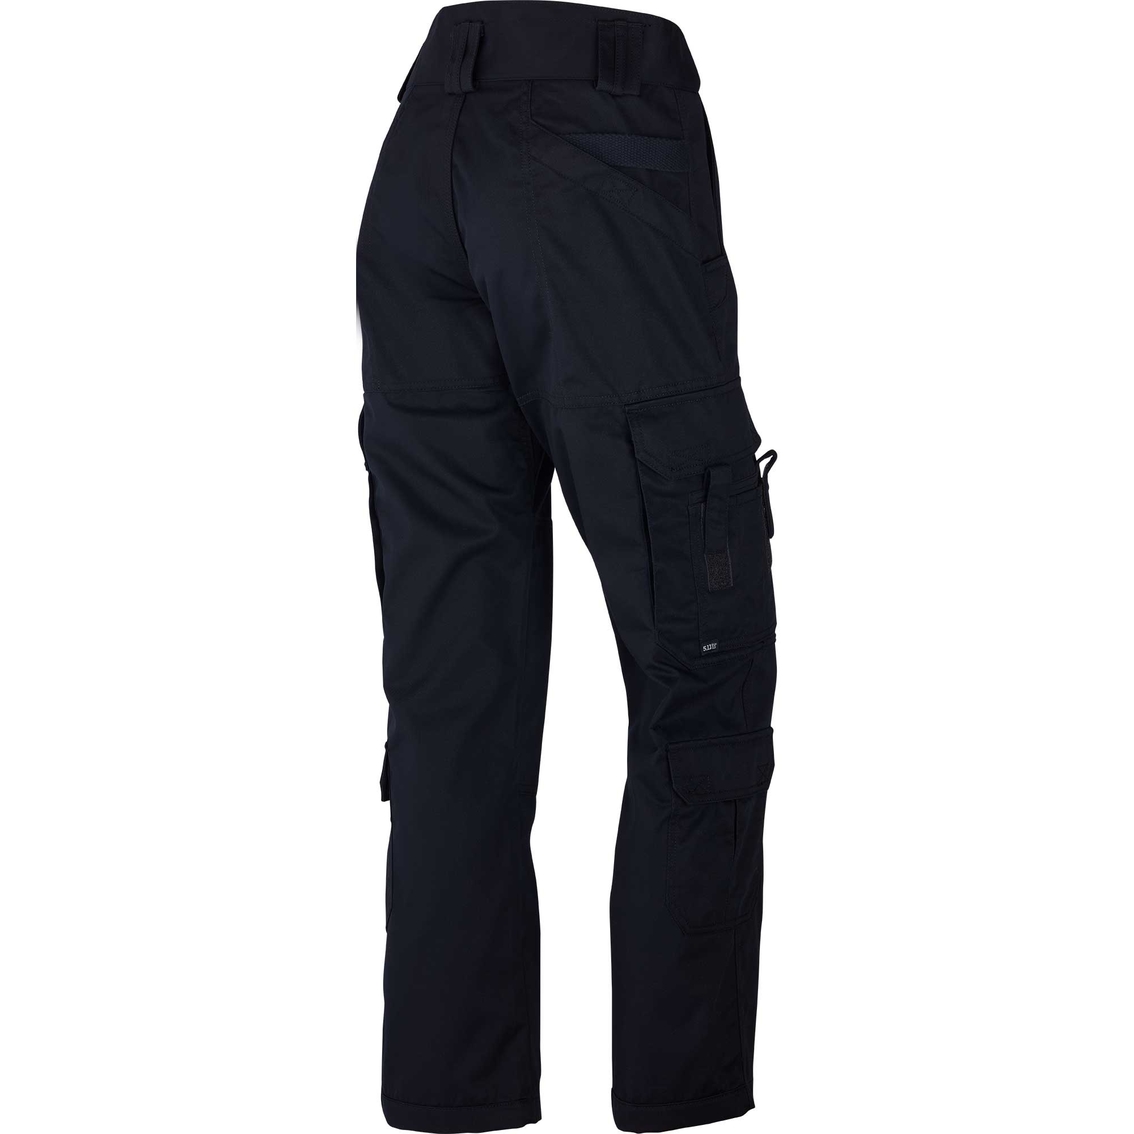 5.11 Women's EMS Pants - Image 5 of 5